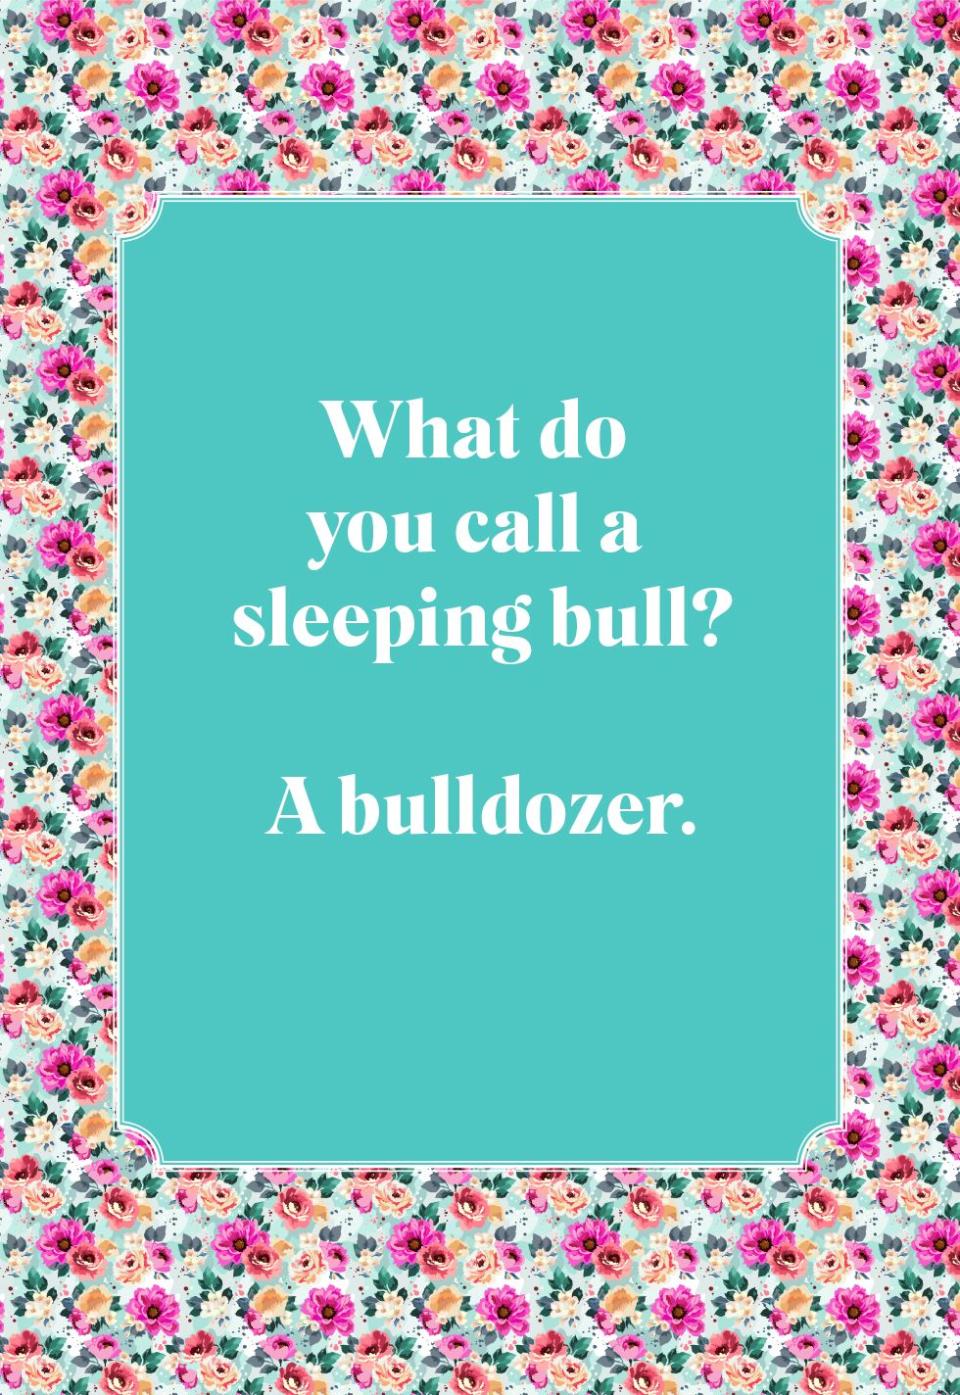 What do you call a sleeping bull?